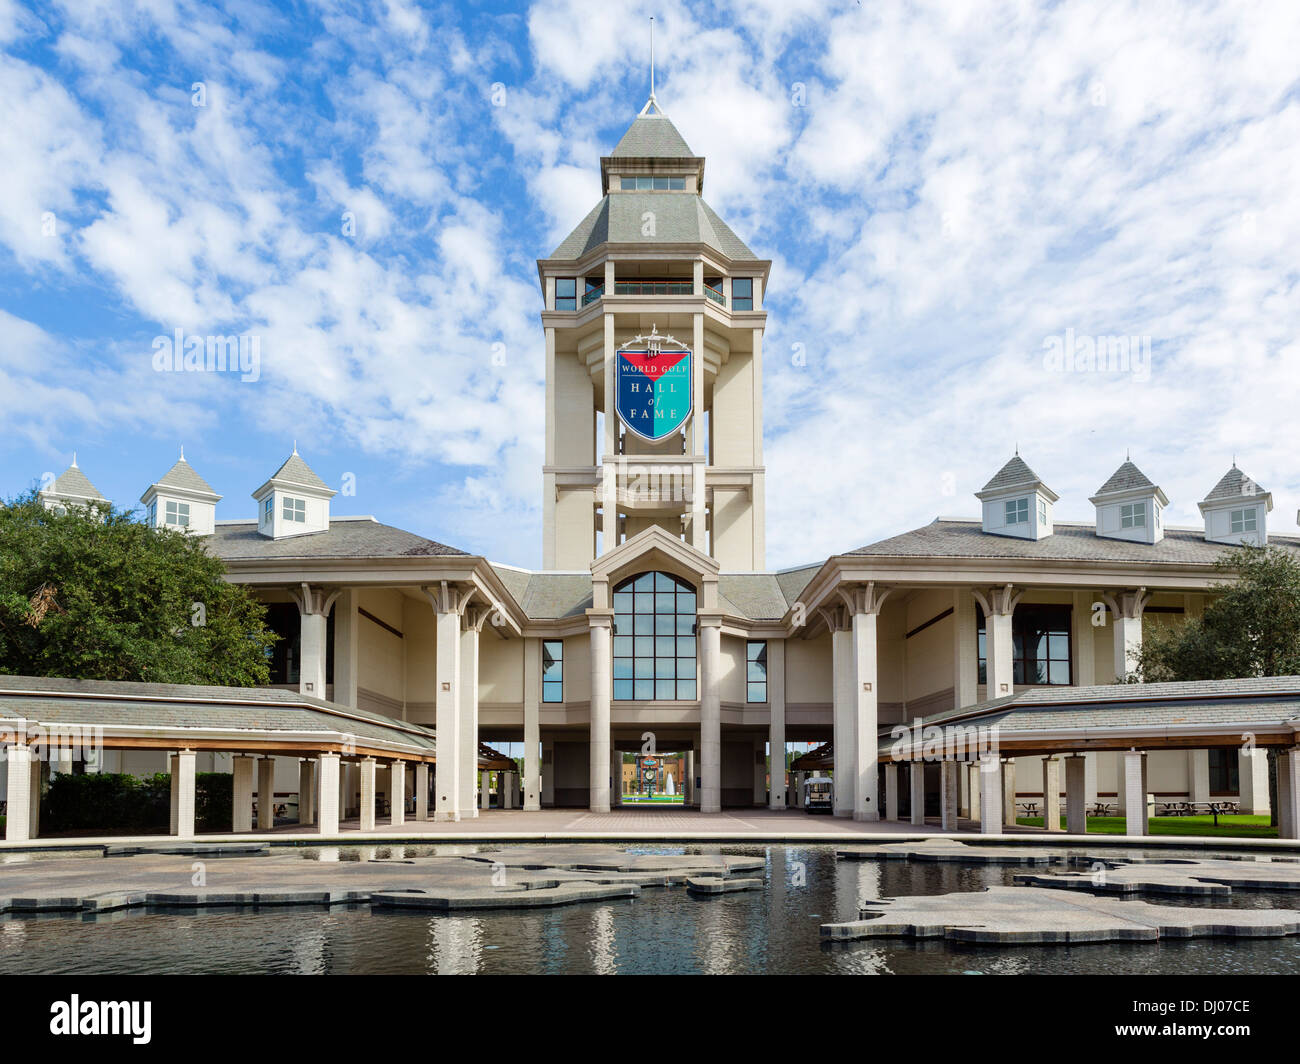 El World Golf Hall of Fame, cerca de San Agustín, Florida, EE.UU. Foto de stock